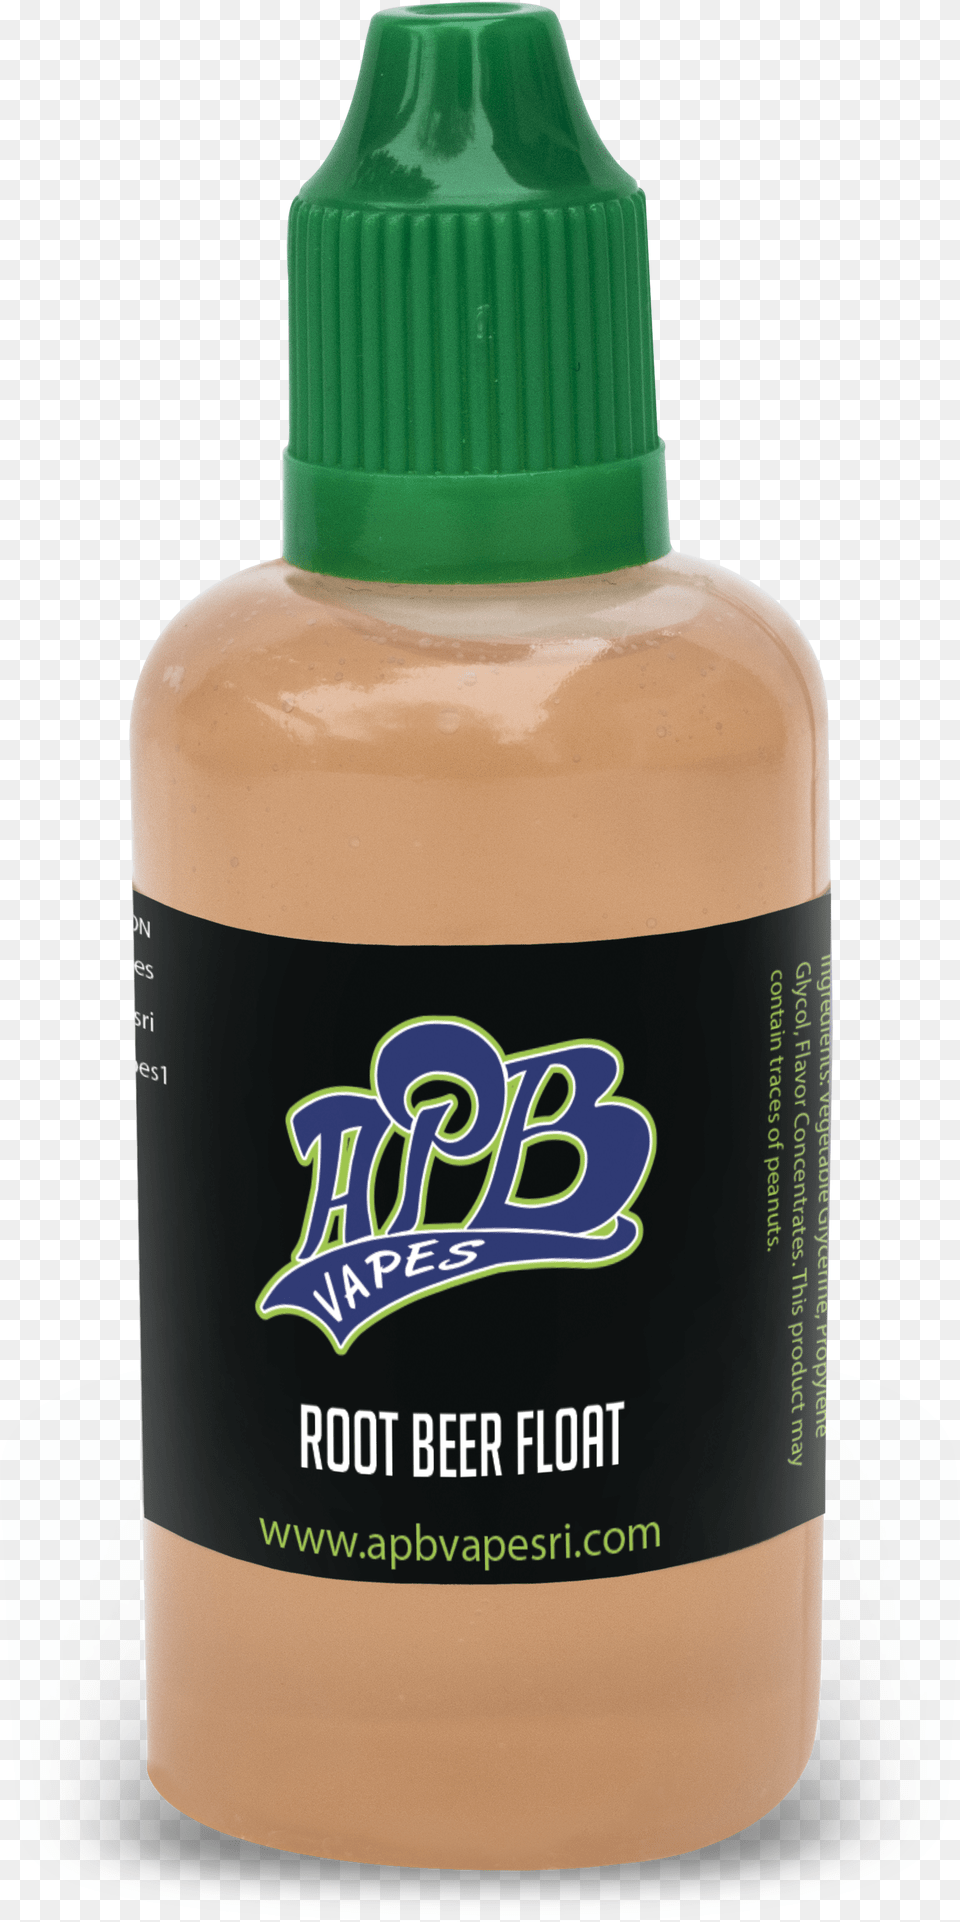 Root Beer Float Plastic Bottle, Shaker, Food, Peanut Butter Free Png Download